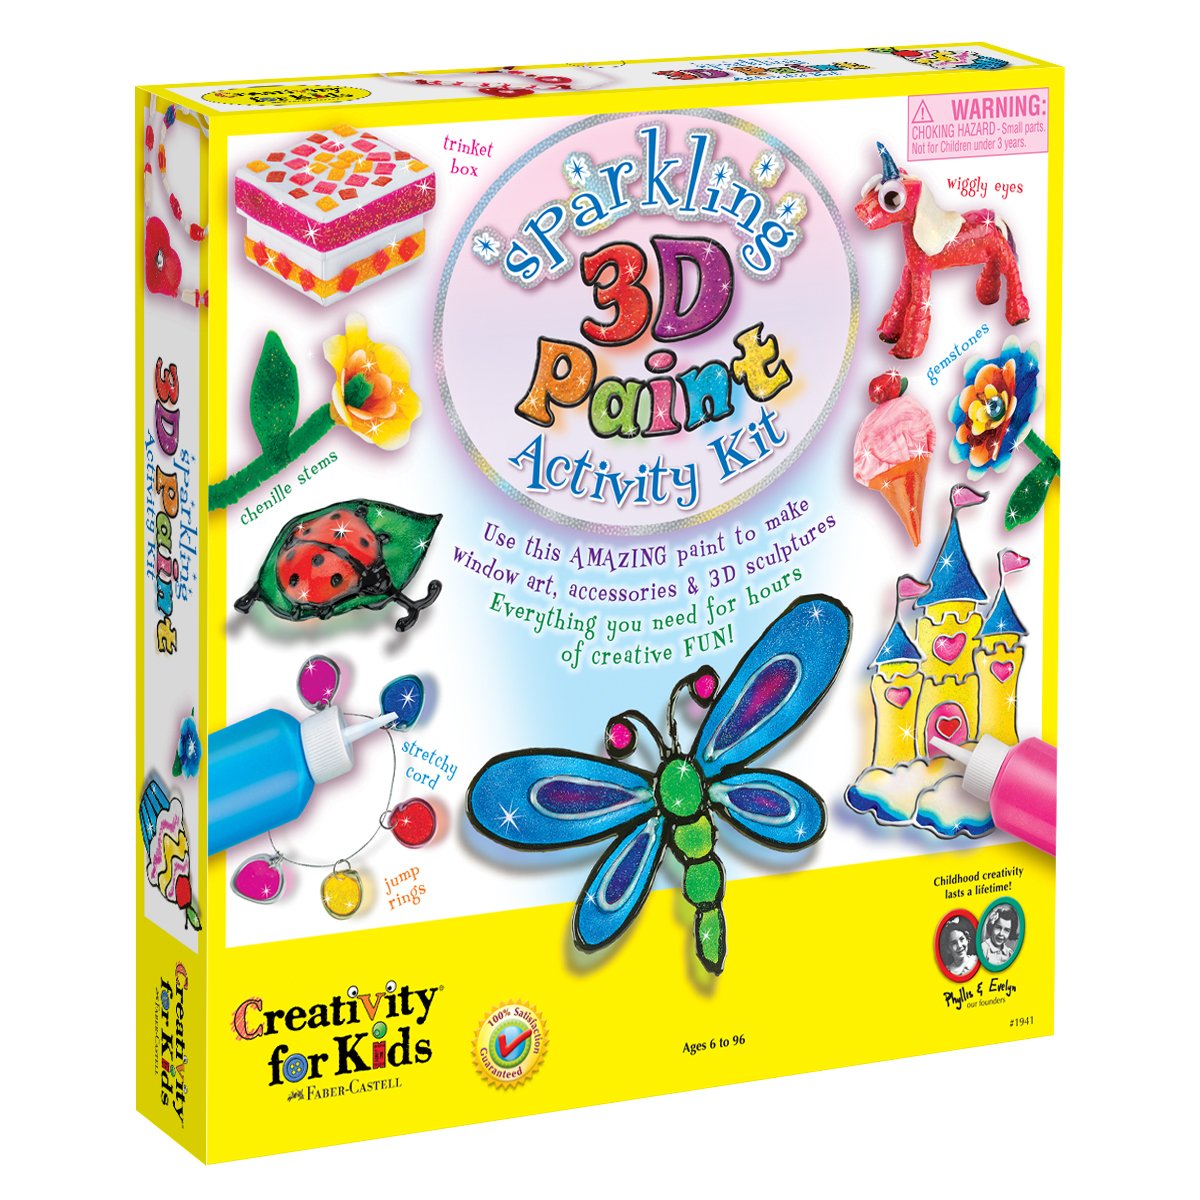 Creativity for Kids Sparkling 3D Wonder Paint Activity Kit - Deluxe Window Art Paint Kit , Yellow